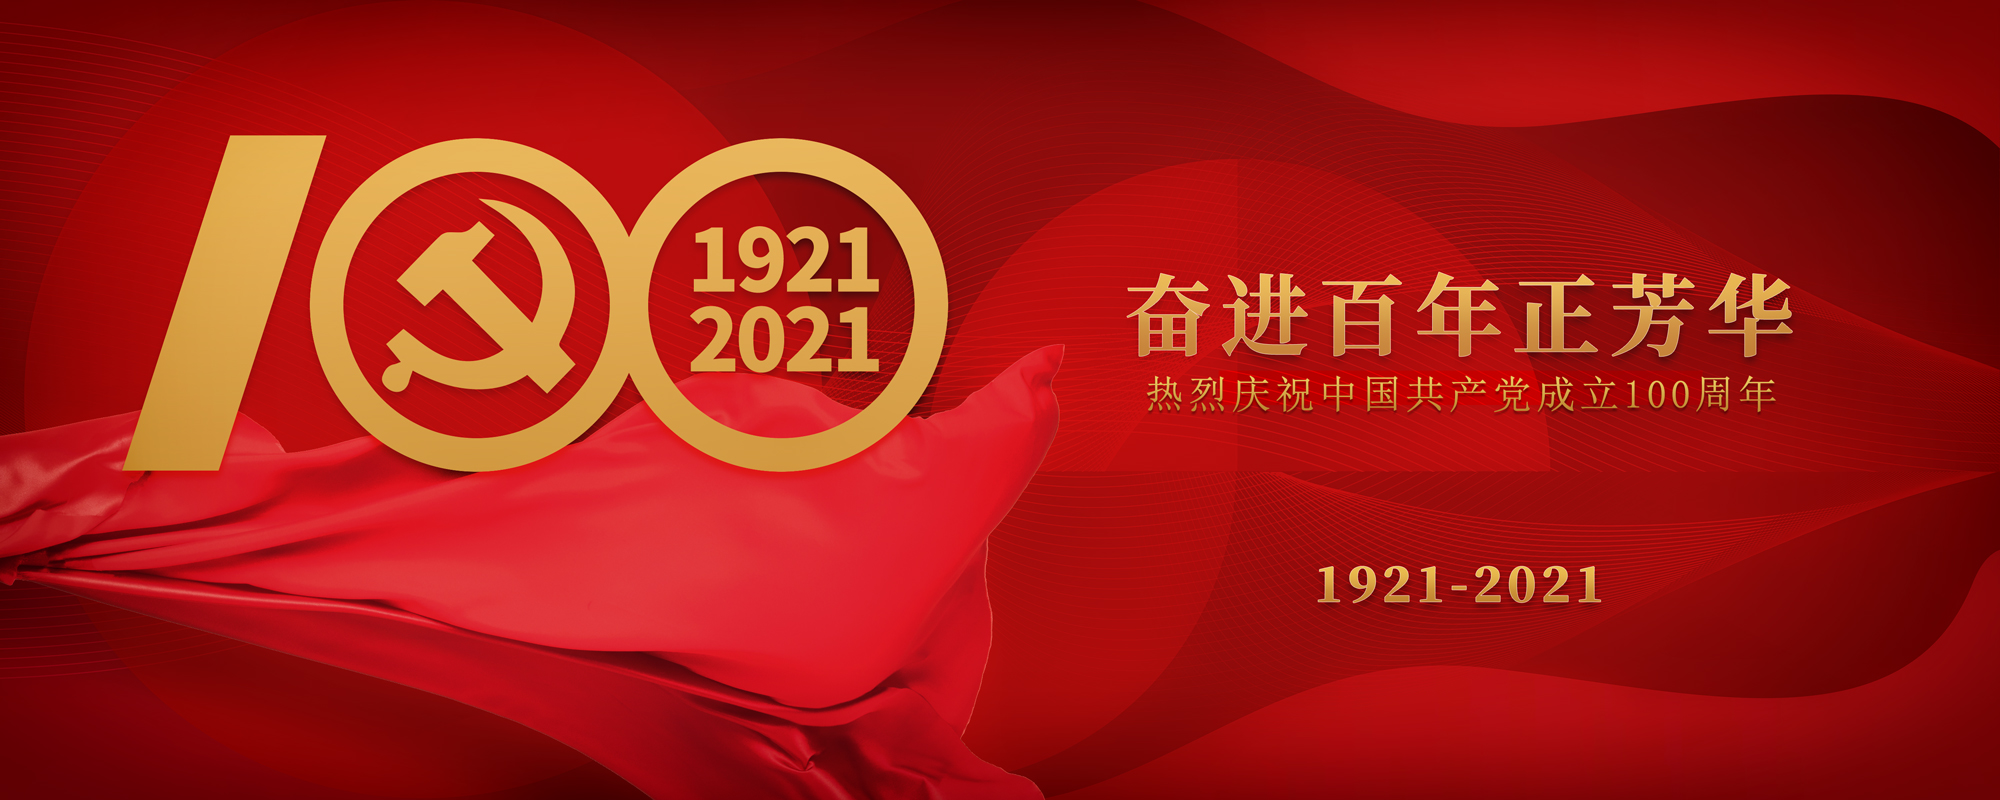 bwin必赢体育祝贺建党100周年